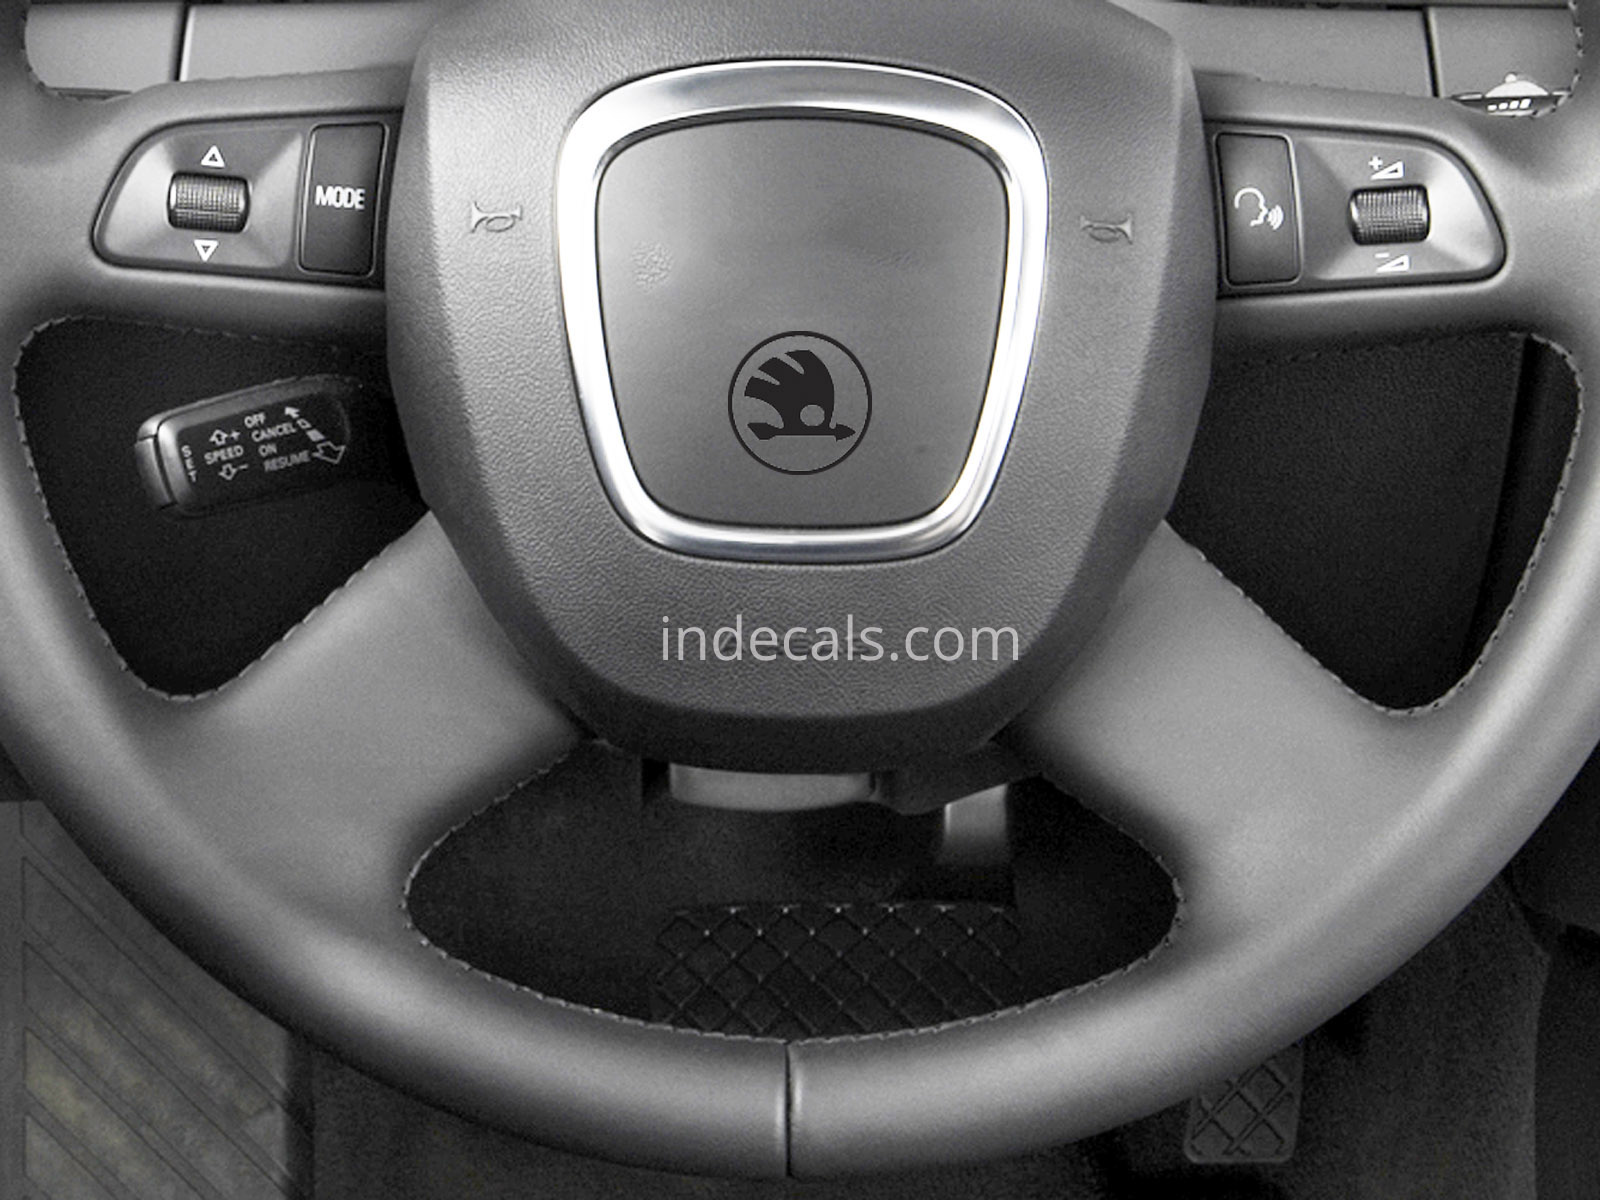 3 x Skoda Stickers for Steering Wheel - Black